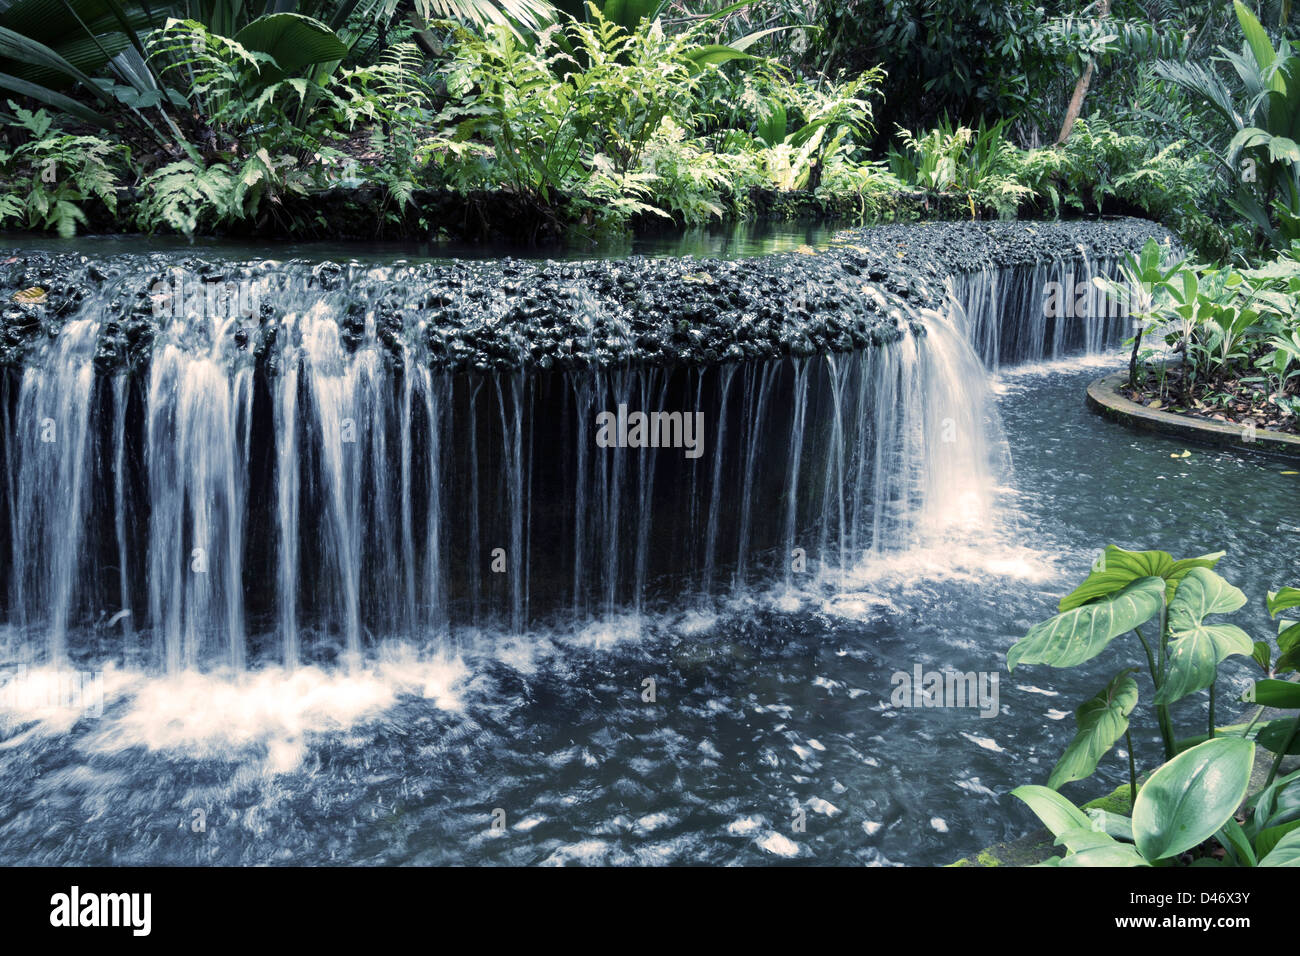 fresh artificial water cascade with rainforest surroundings in Singapore's Botanical garden Stock Photo